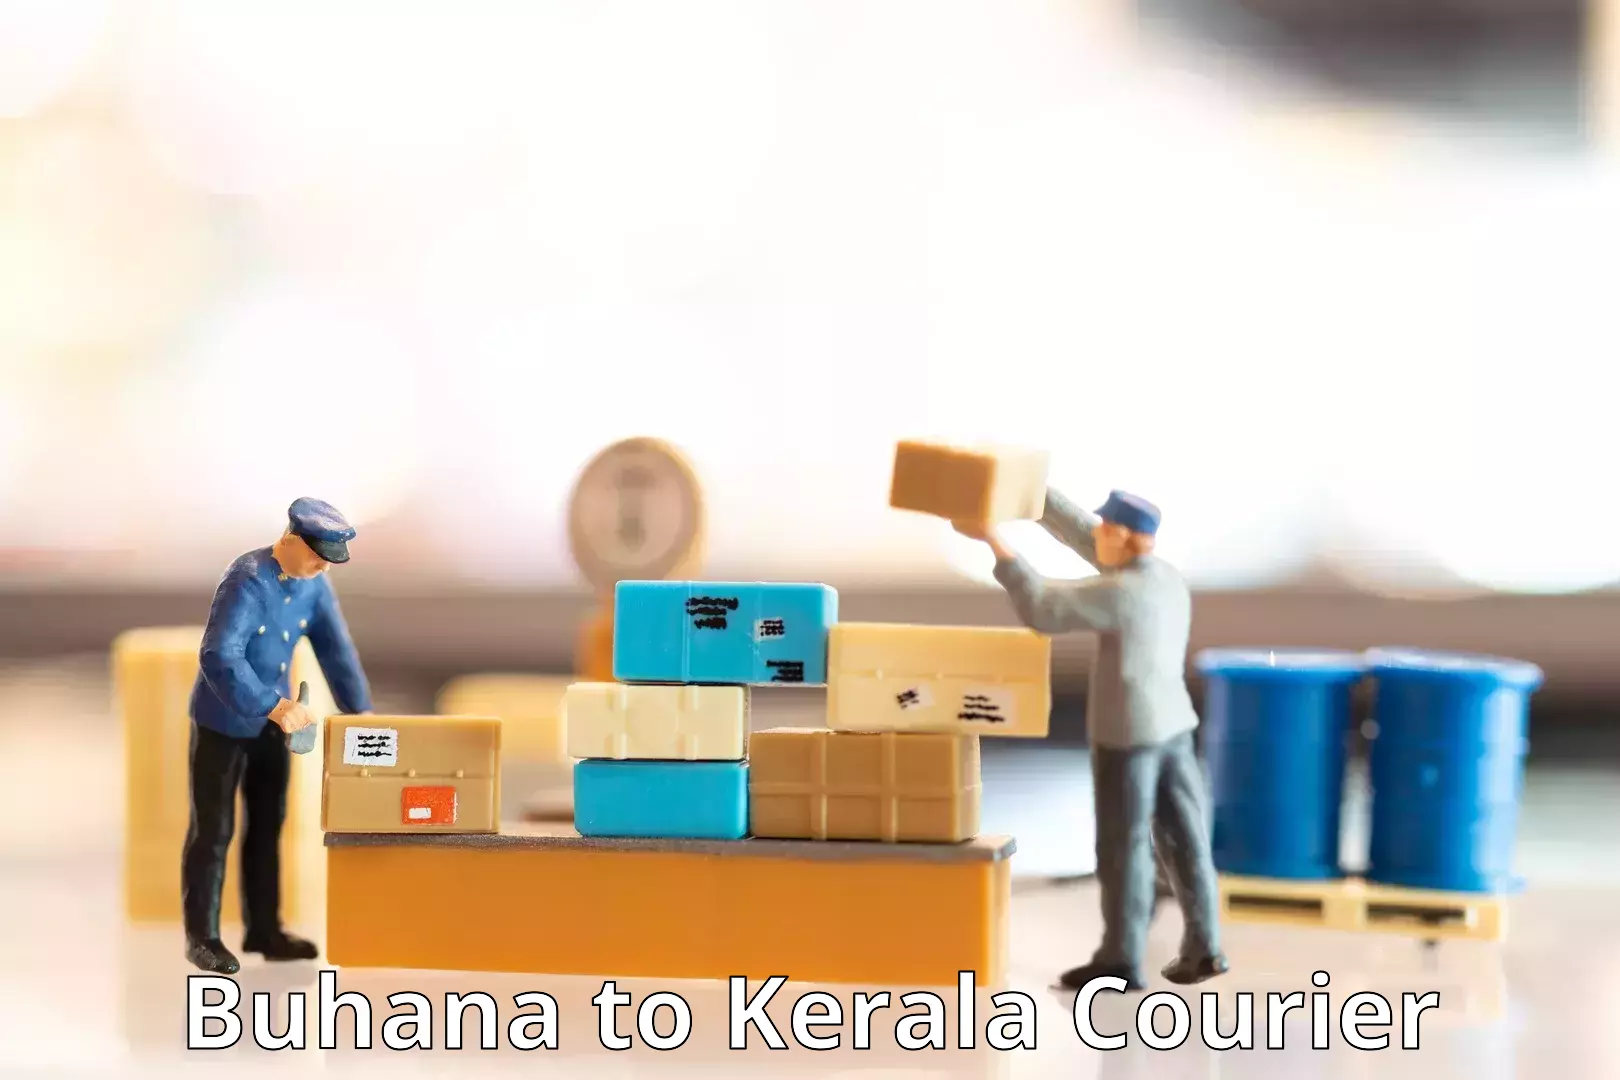 Modern delivery technologies Buhana to Kerala